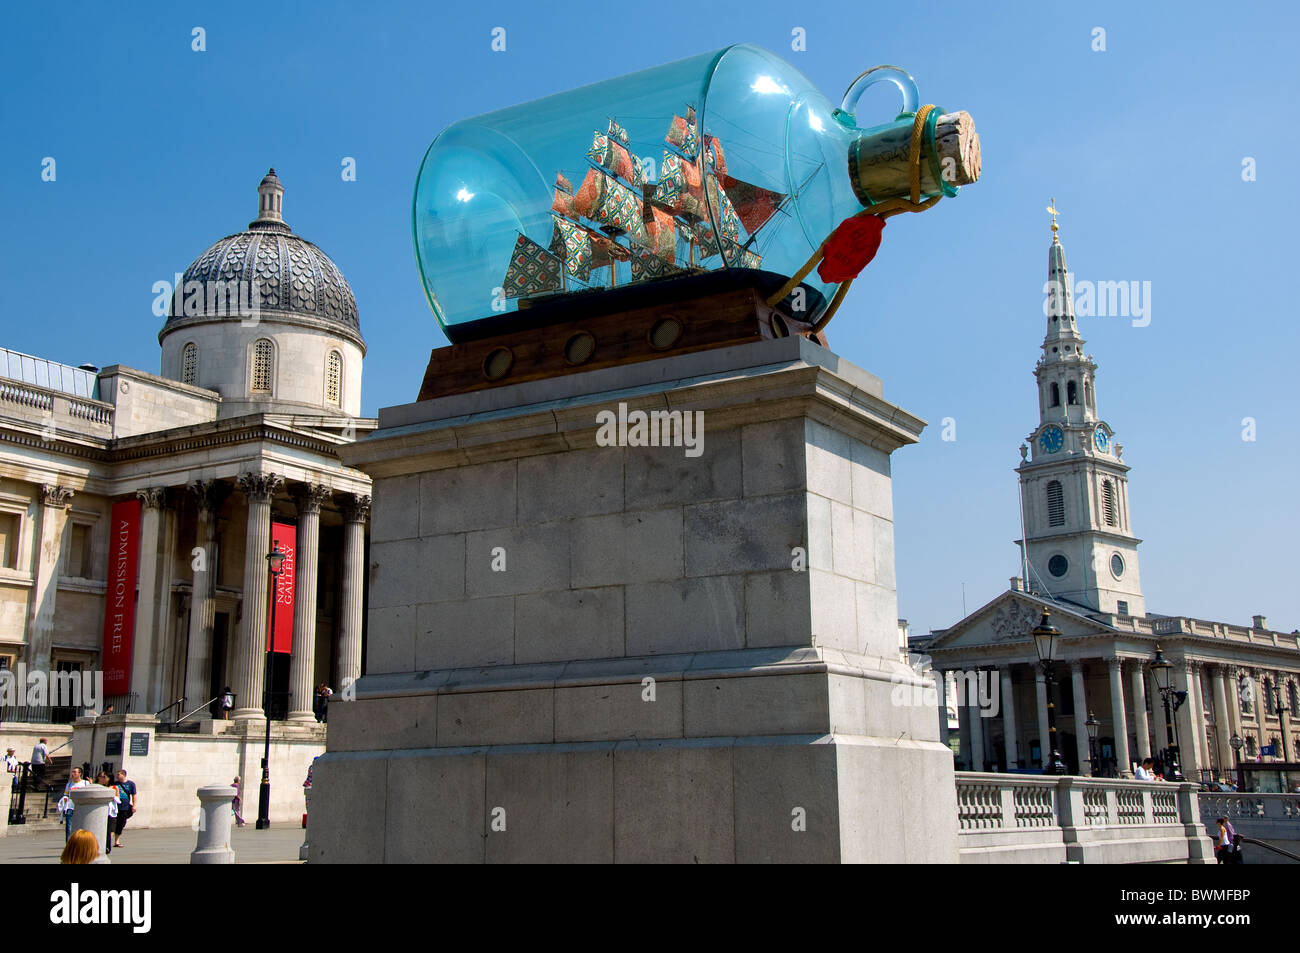 Ship in a bottle, Trafalgar Square, London, England Stock Photo